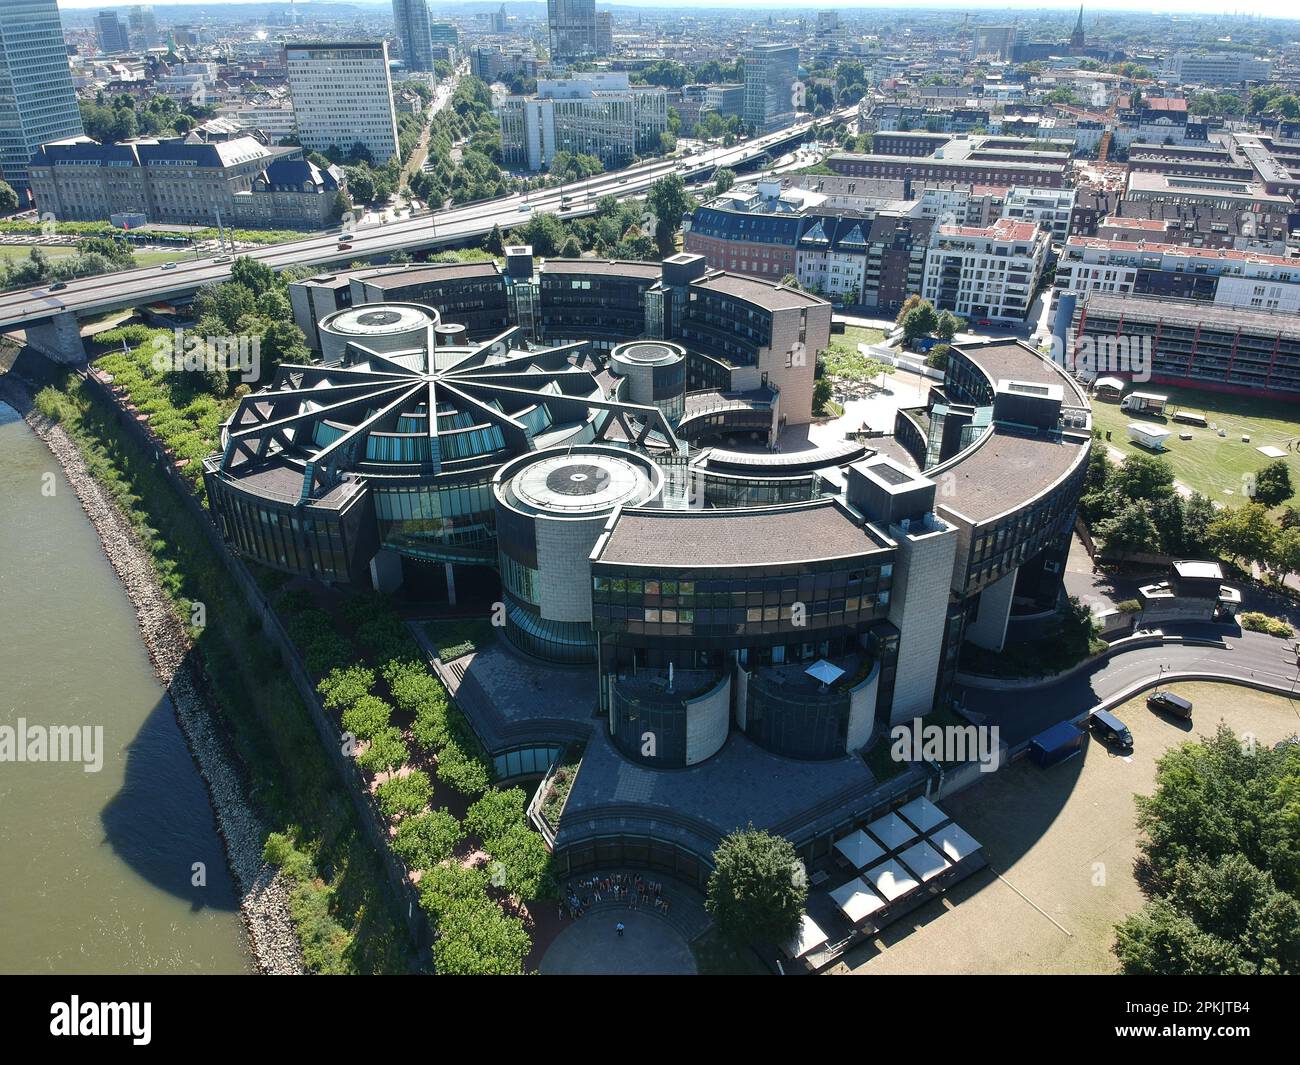 29.06.2018. Düsseldorf, DE. Luftaufnahme des Landtags, landesparlamentsgebäude in Düsseldorf. Kredit: Ant Palmer/Alamy Stockfoto